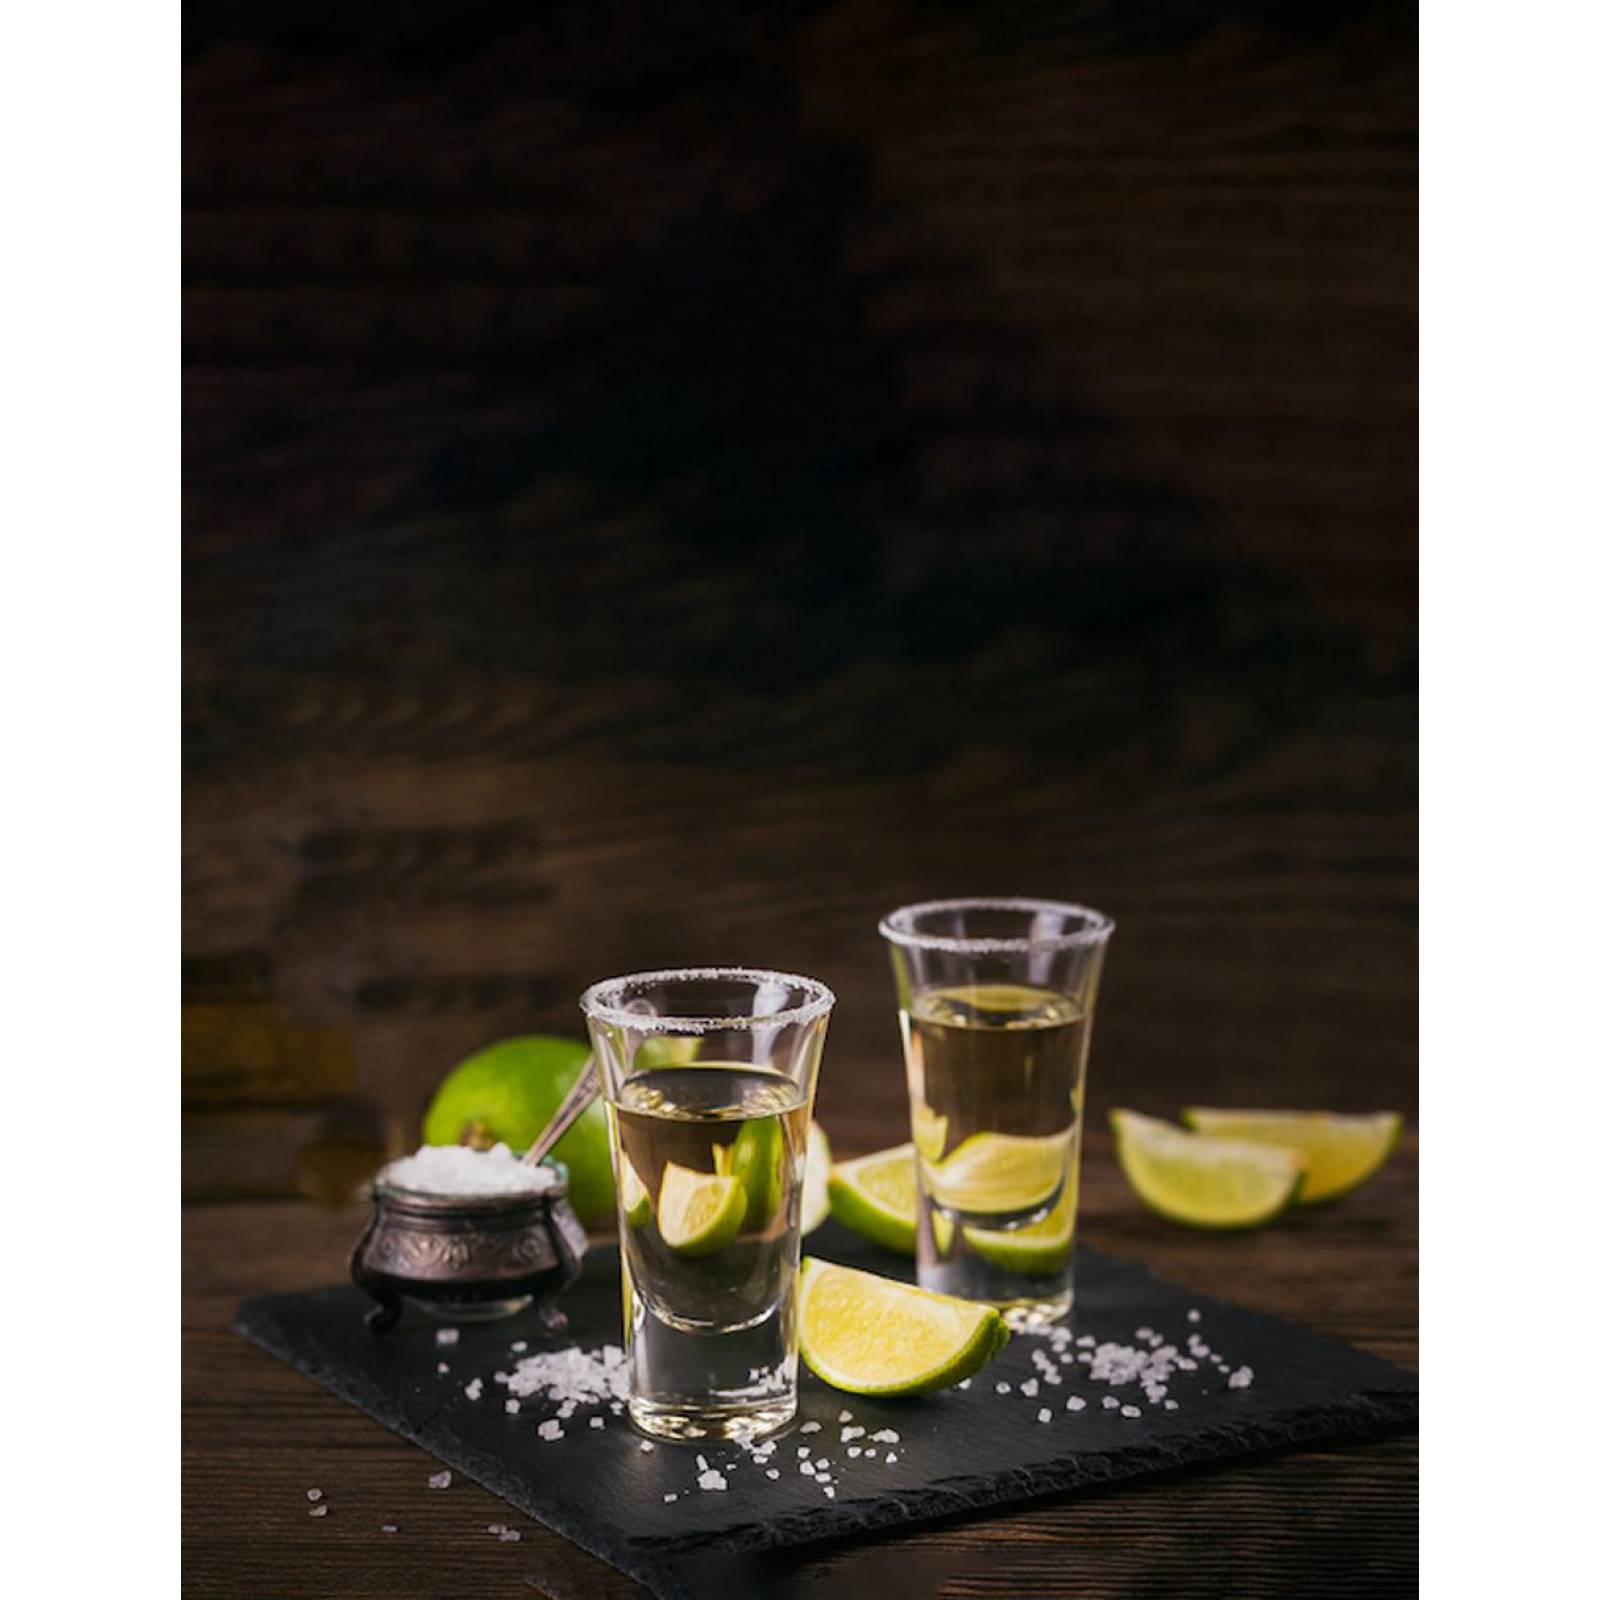 Tequila Jimador Reposado 950 ml 